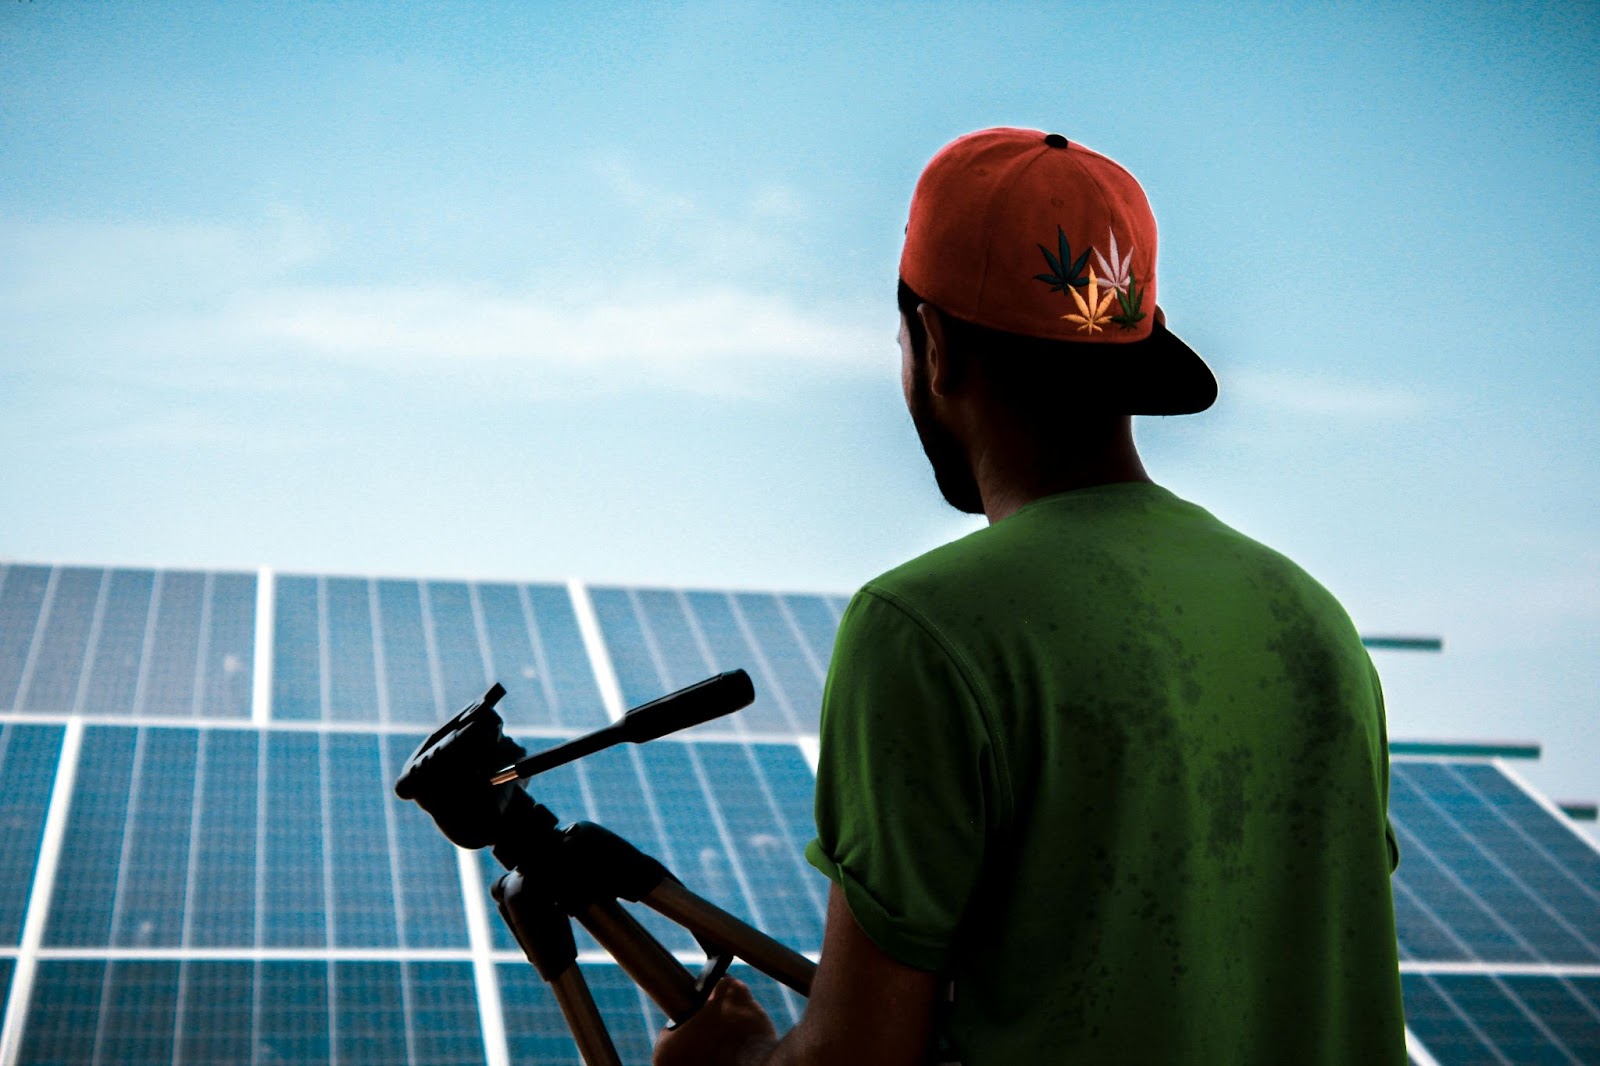 Man holding a camera tripod facing a solar array